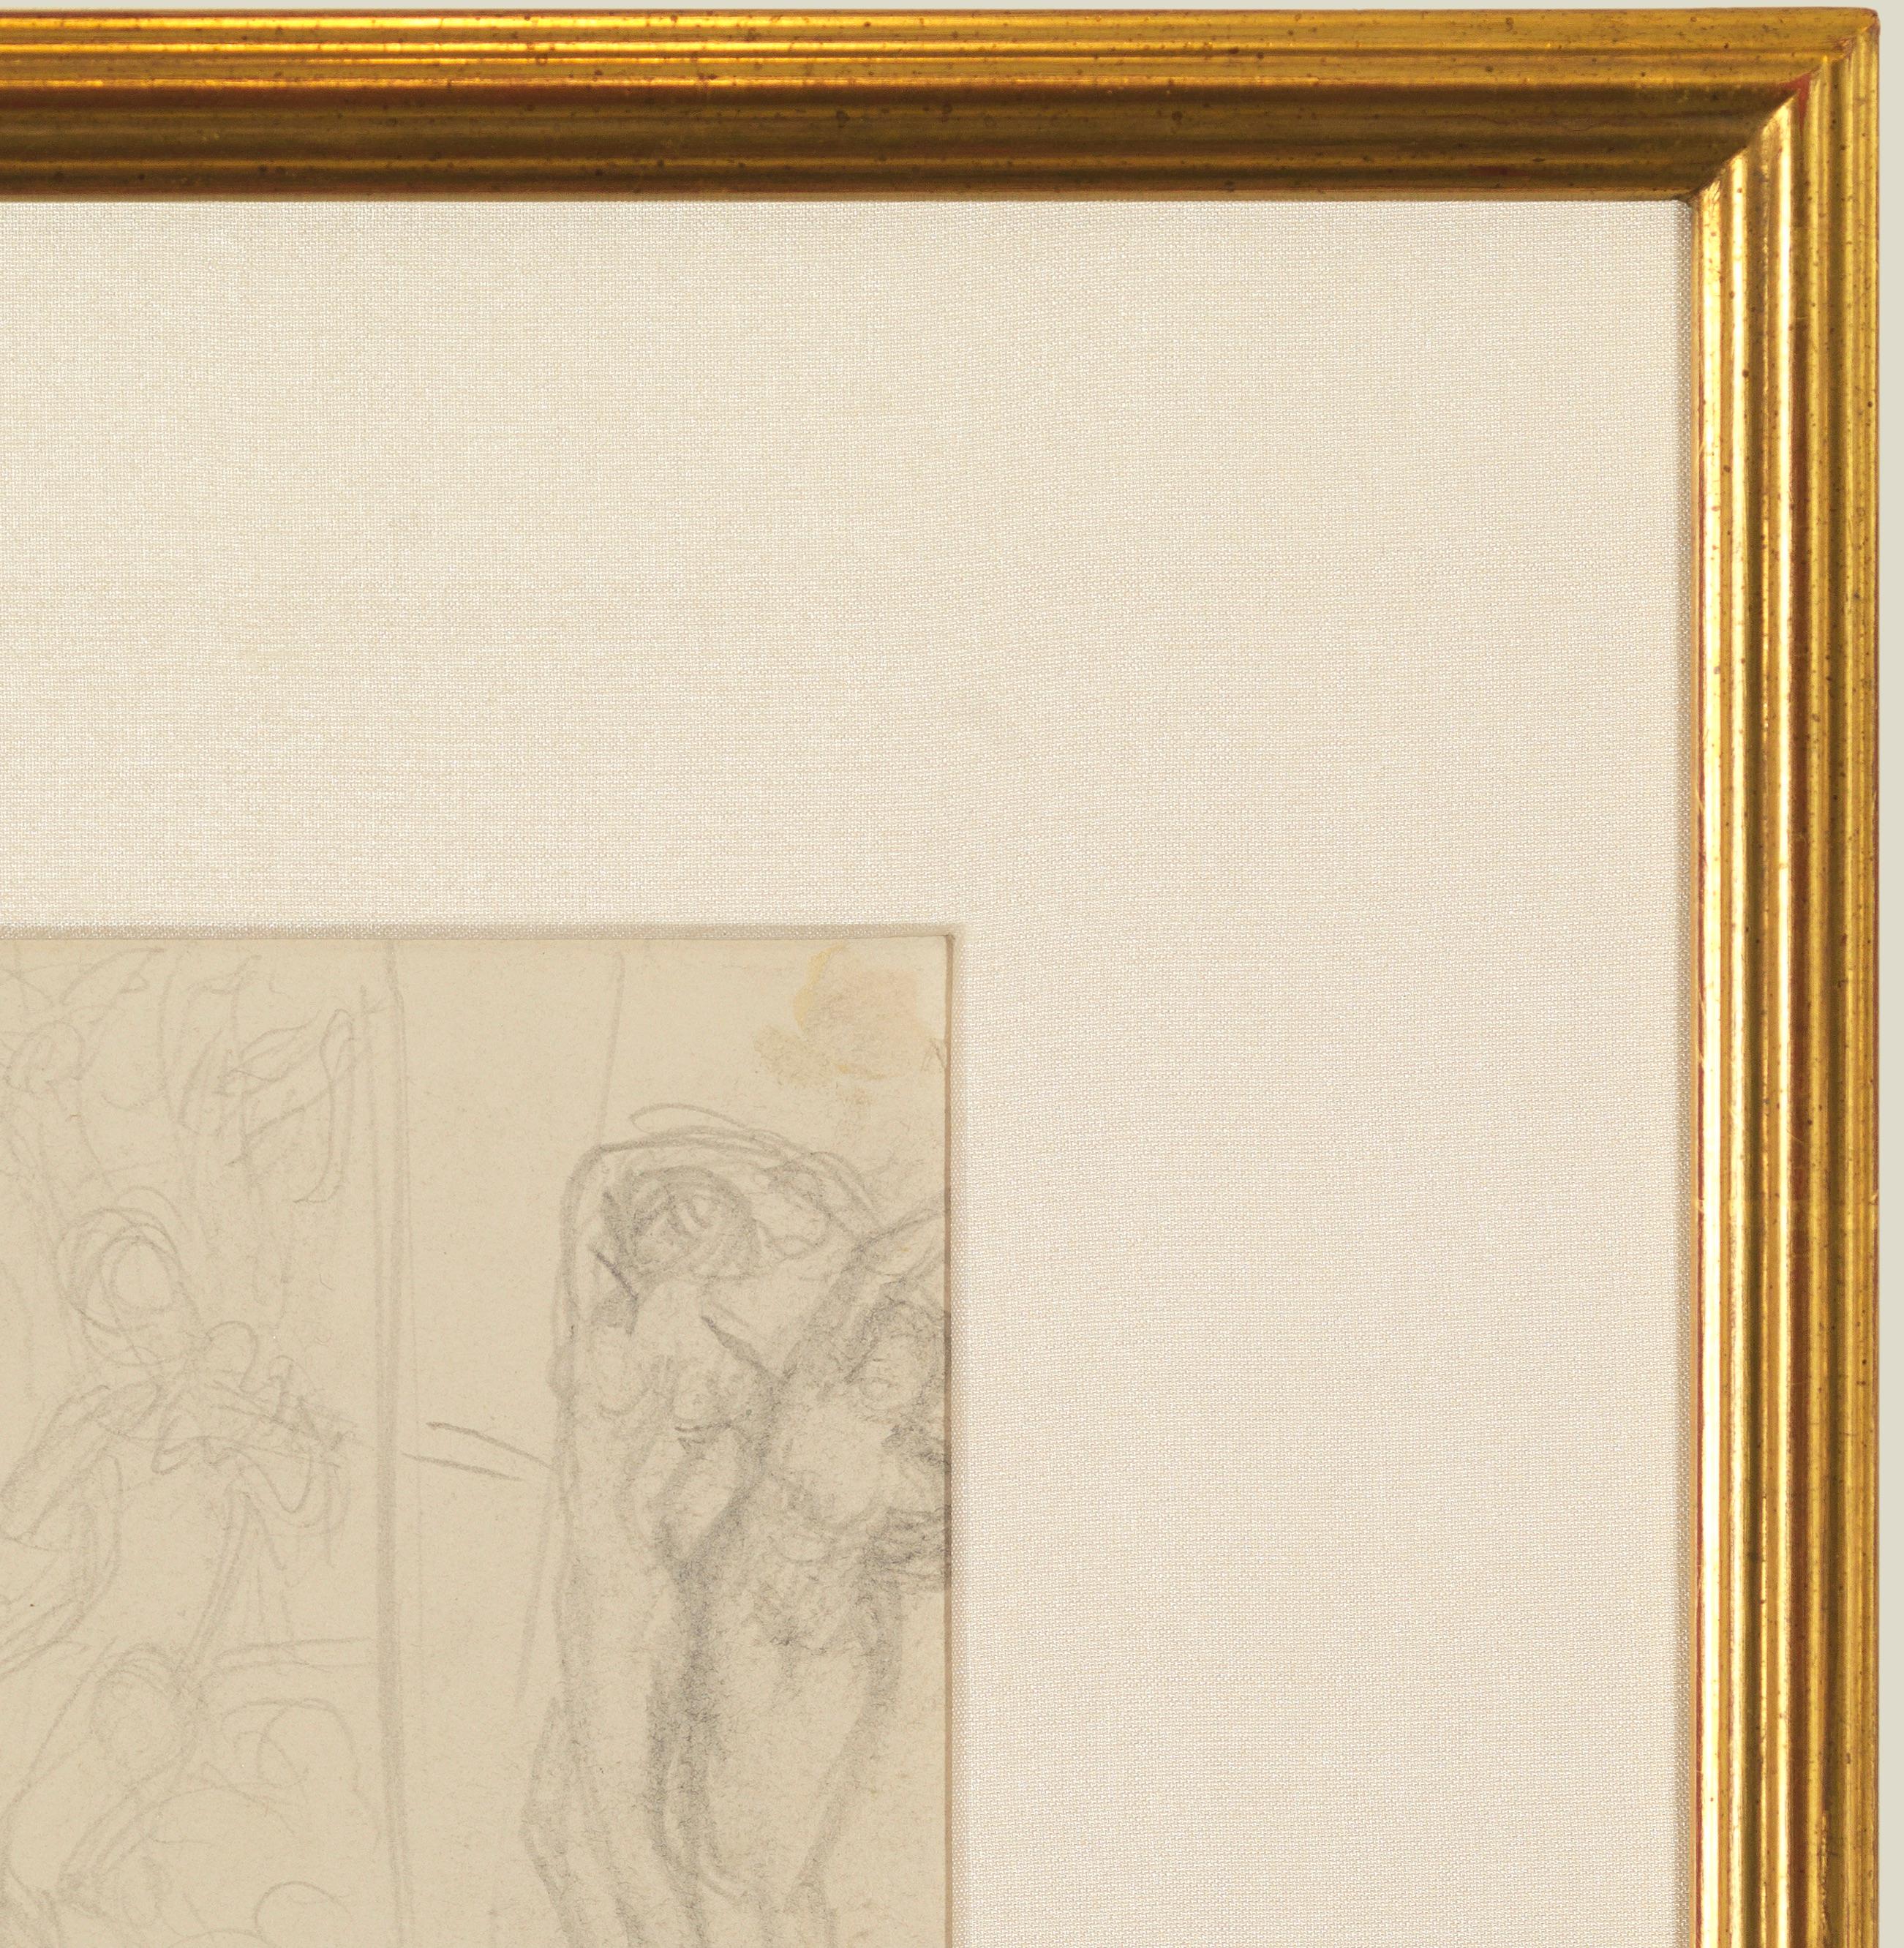 Figure Studies - American Impressionist Art by John Singer Sargent